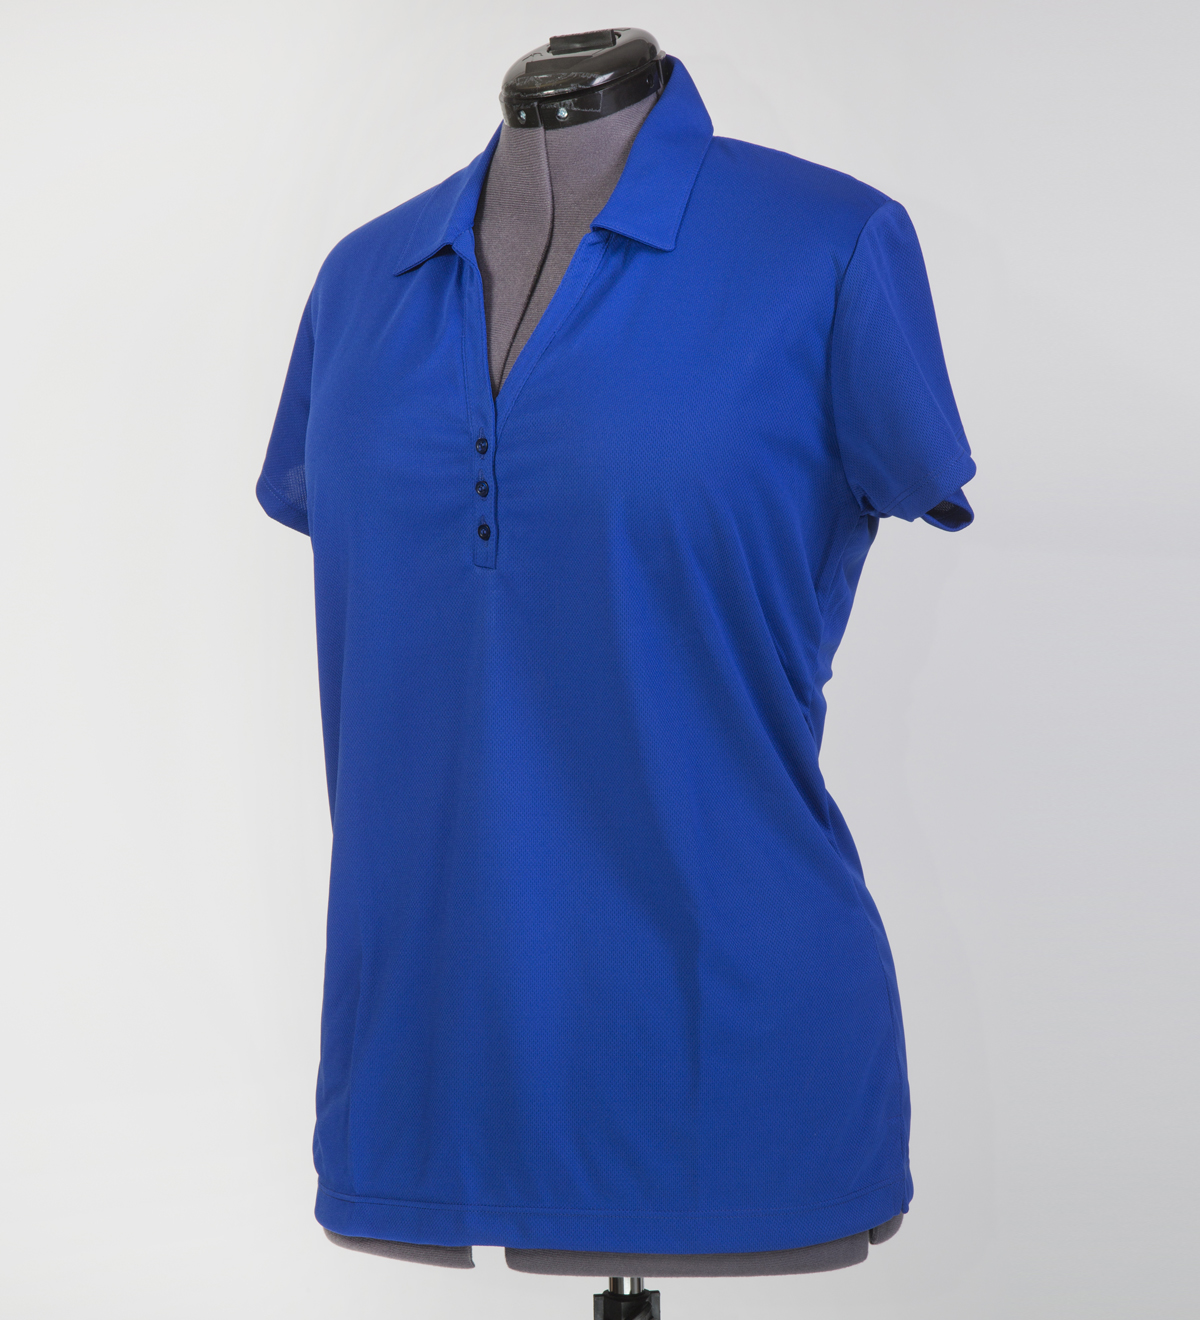 Women’s Polo – Dri-Fit – Shirts Unlimited